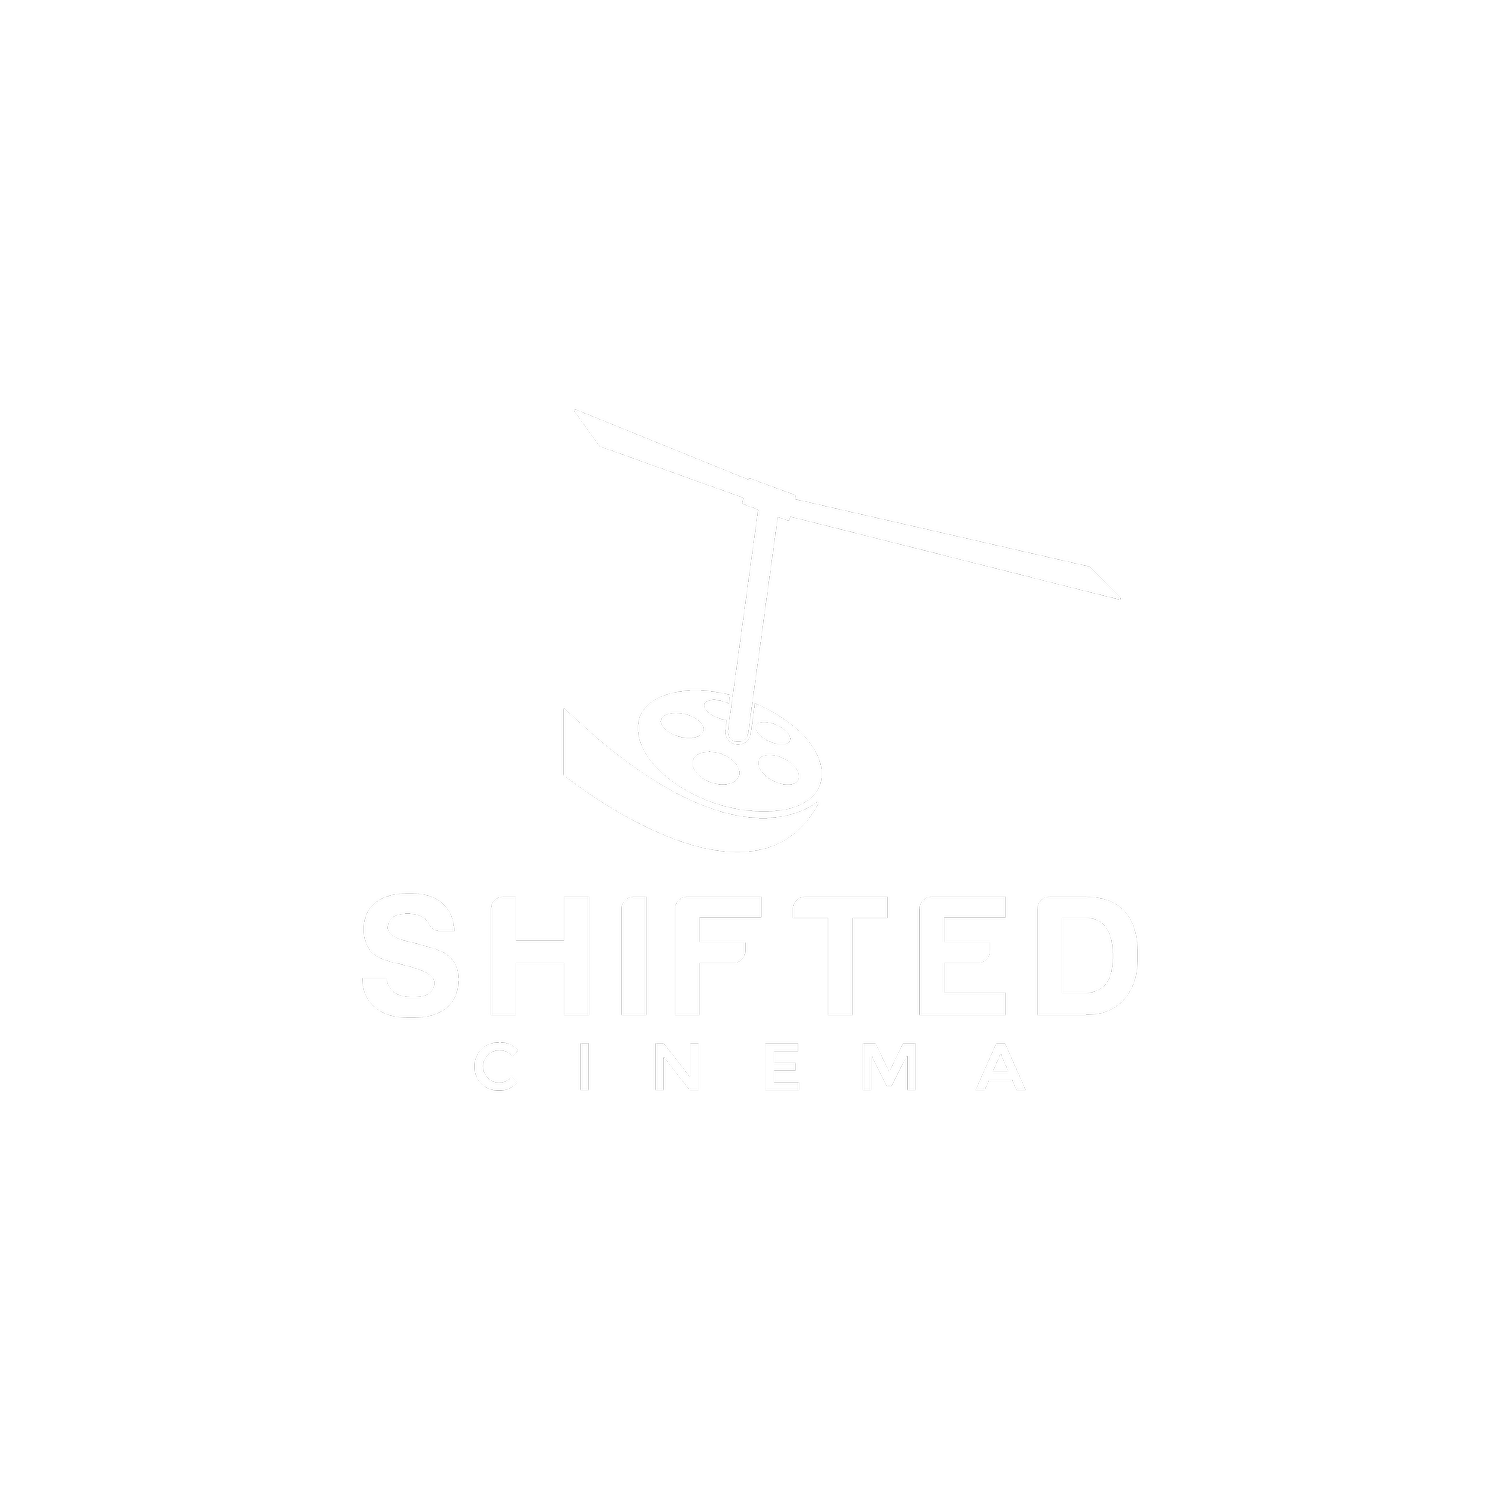 Shifted Cinema